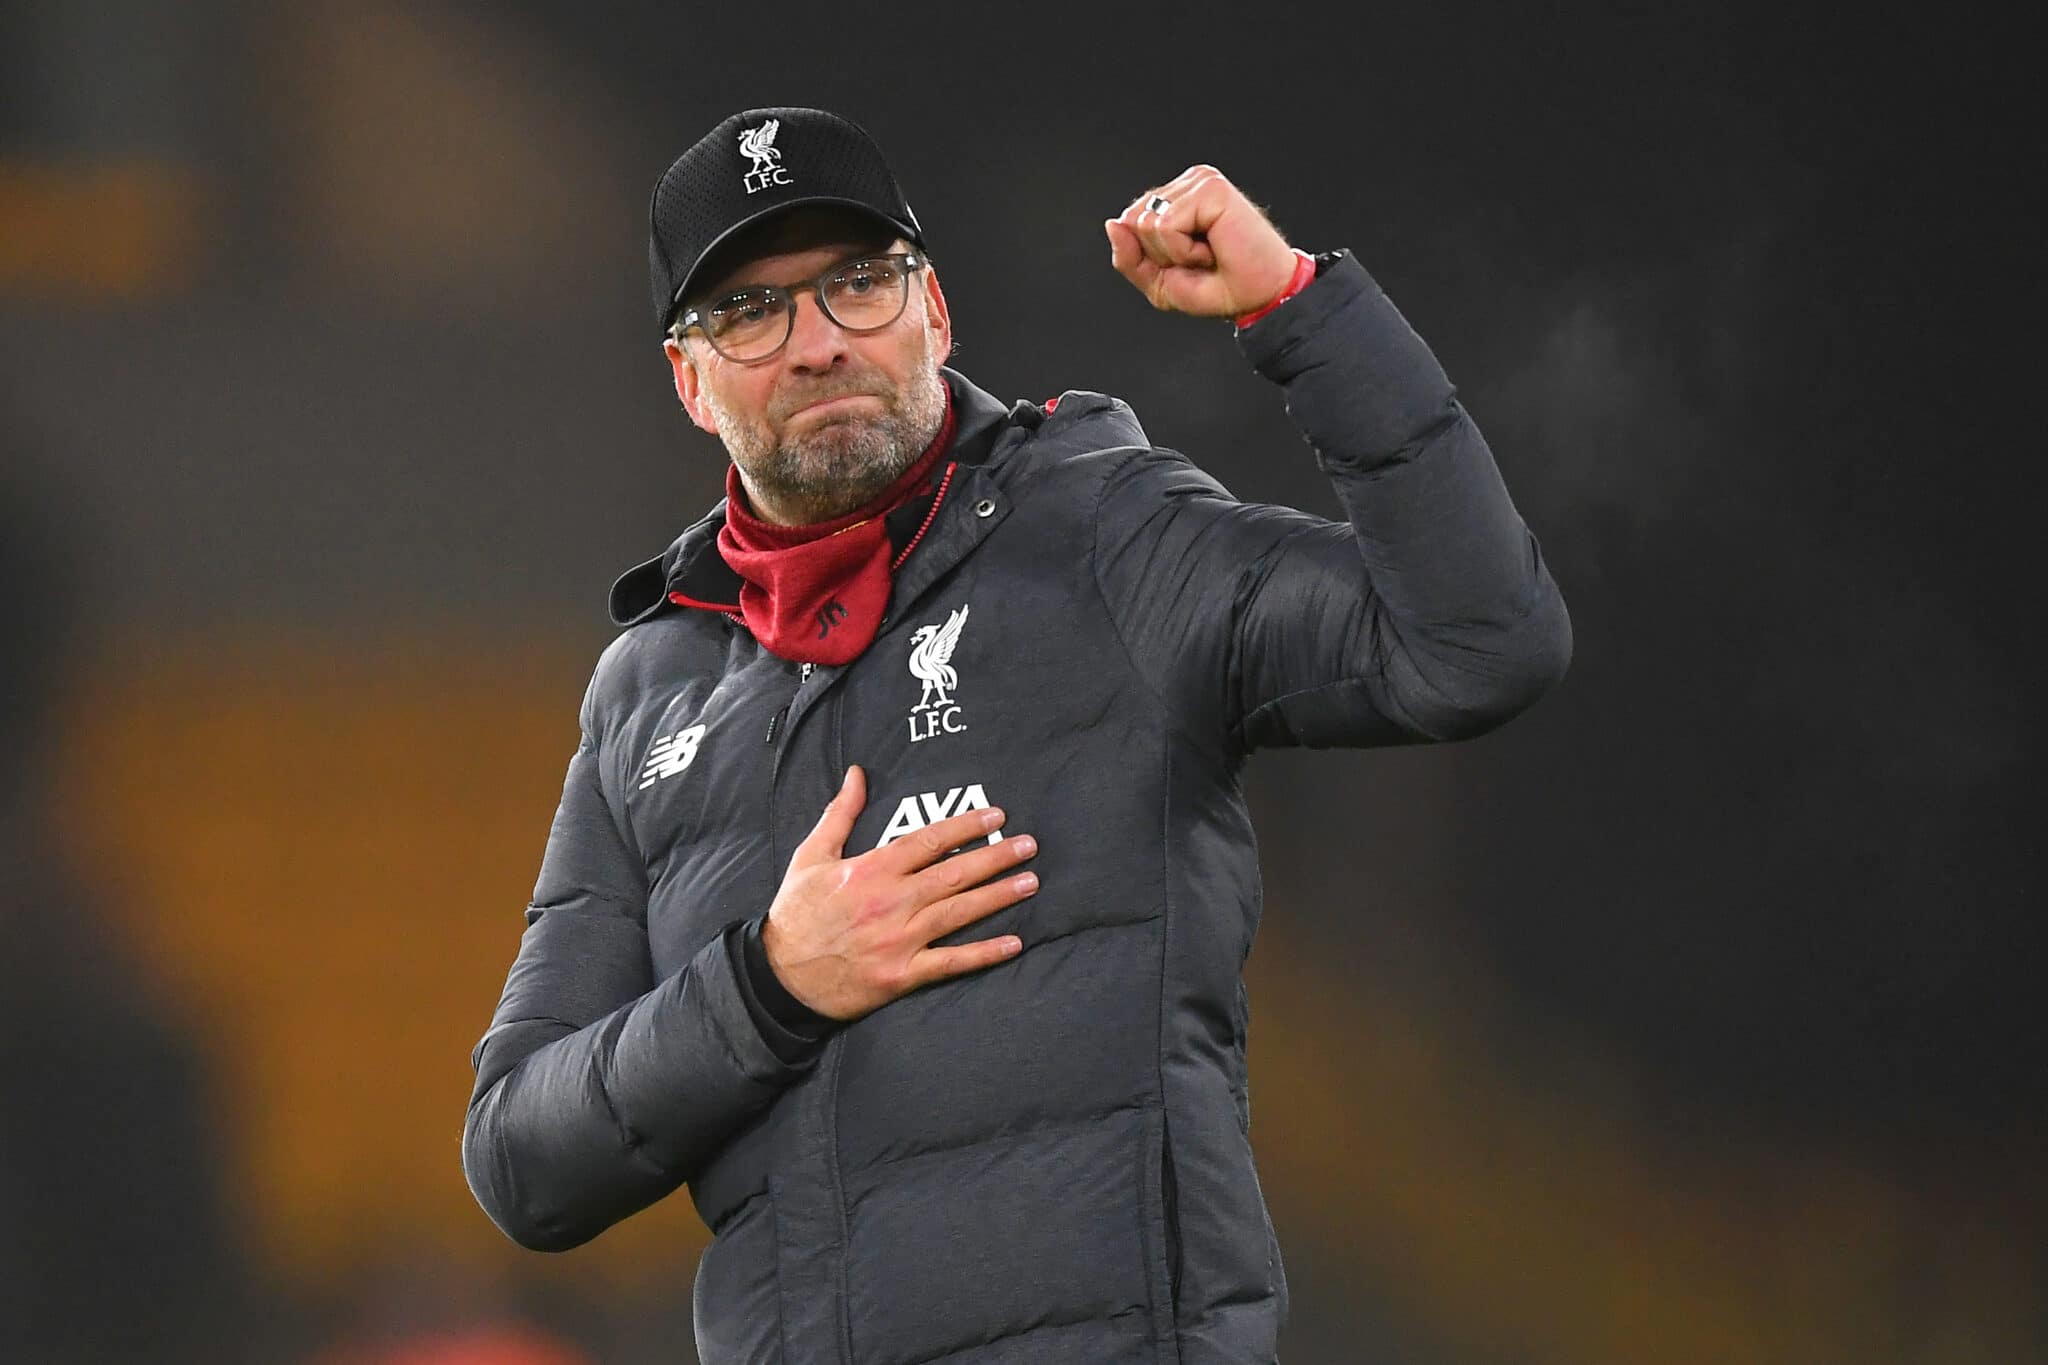 Liverpool manager Jürgen Klopp raises his fist in the air